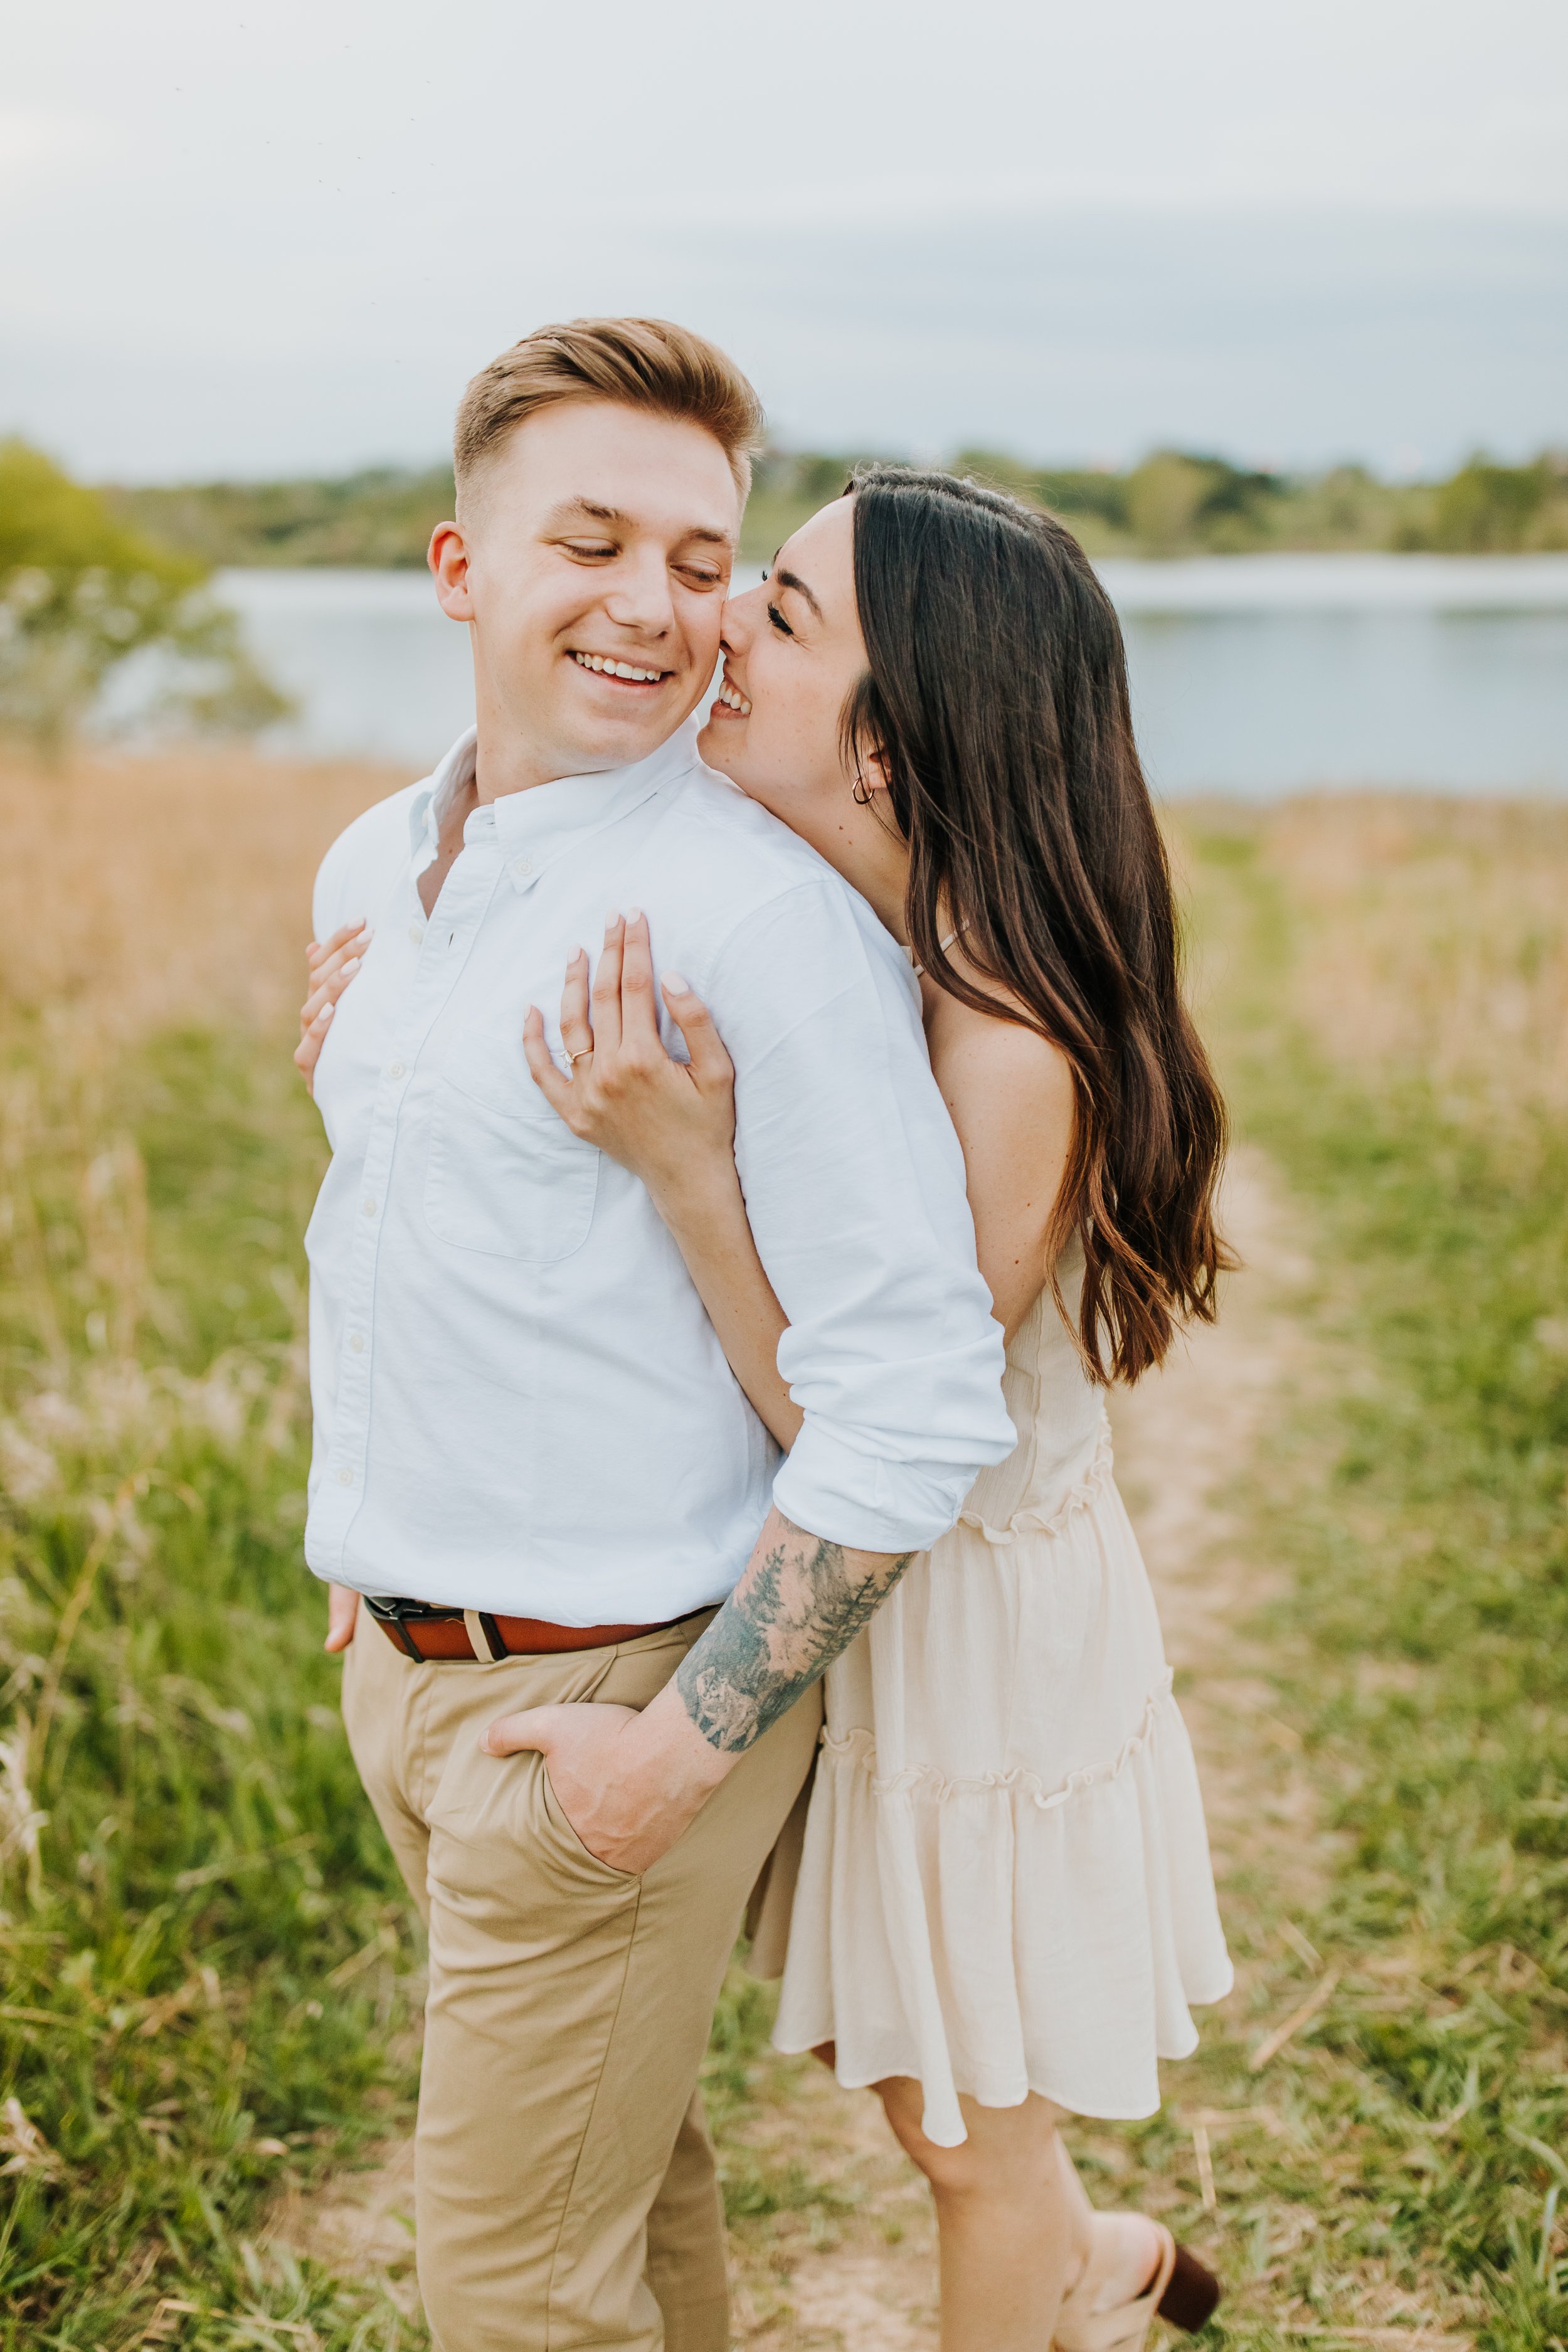 Allison & Liam - Engaged - Nathaniel Jensen Photography - Omaha Nebraska Wedding Photographer-135.jpg